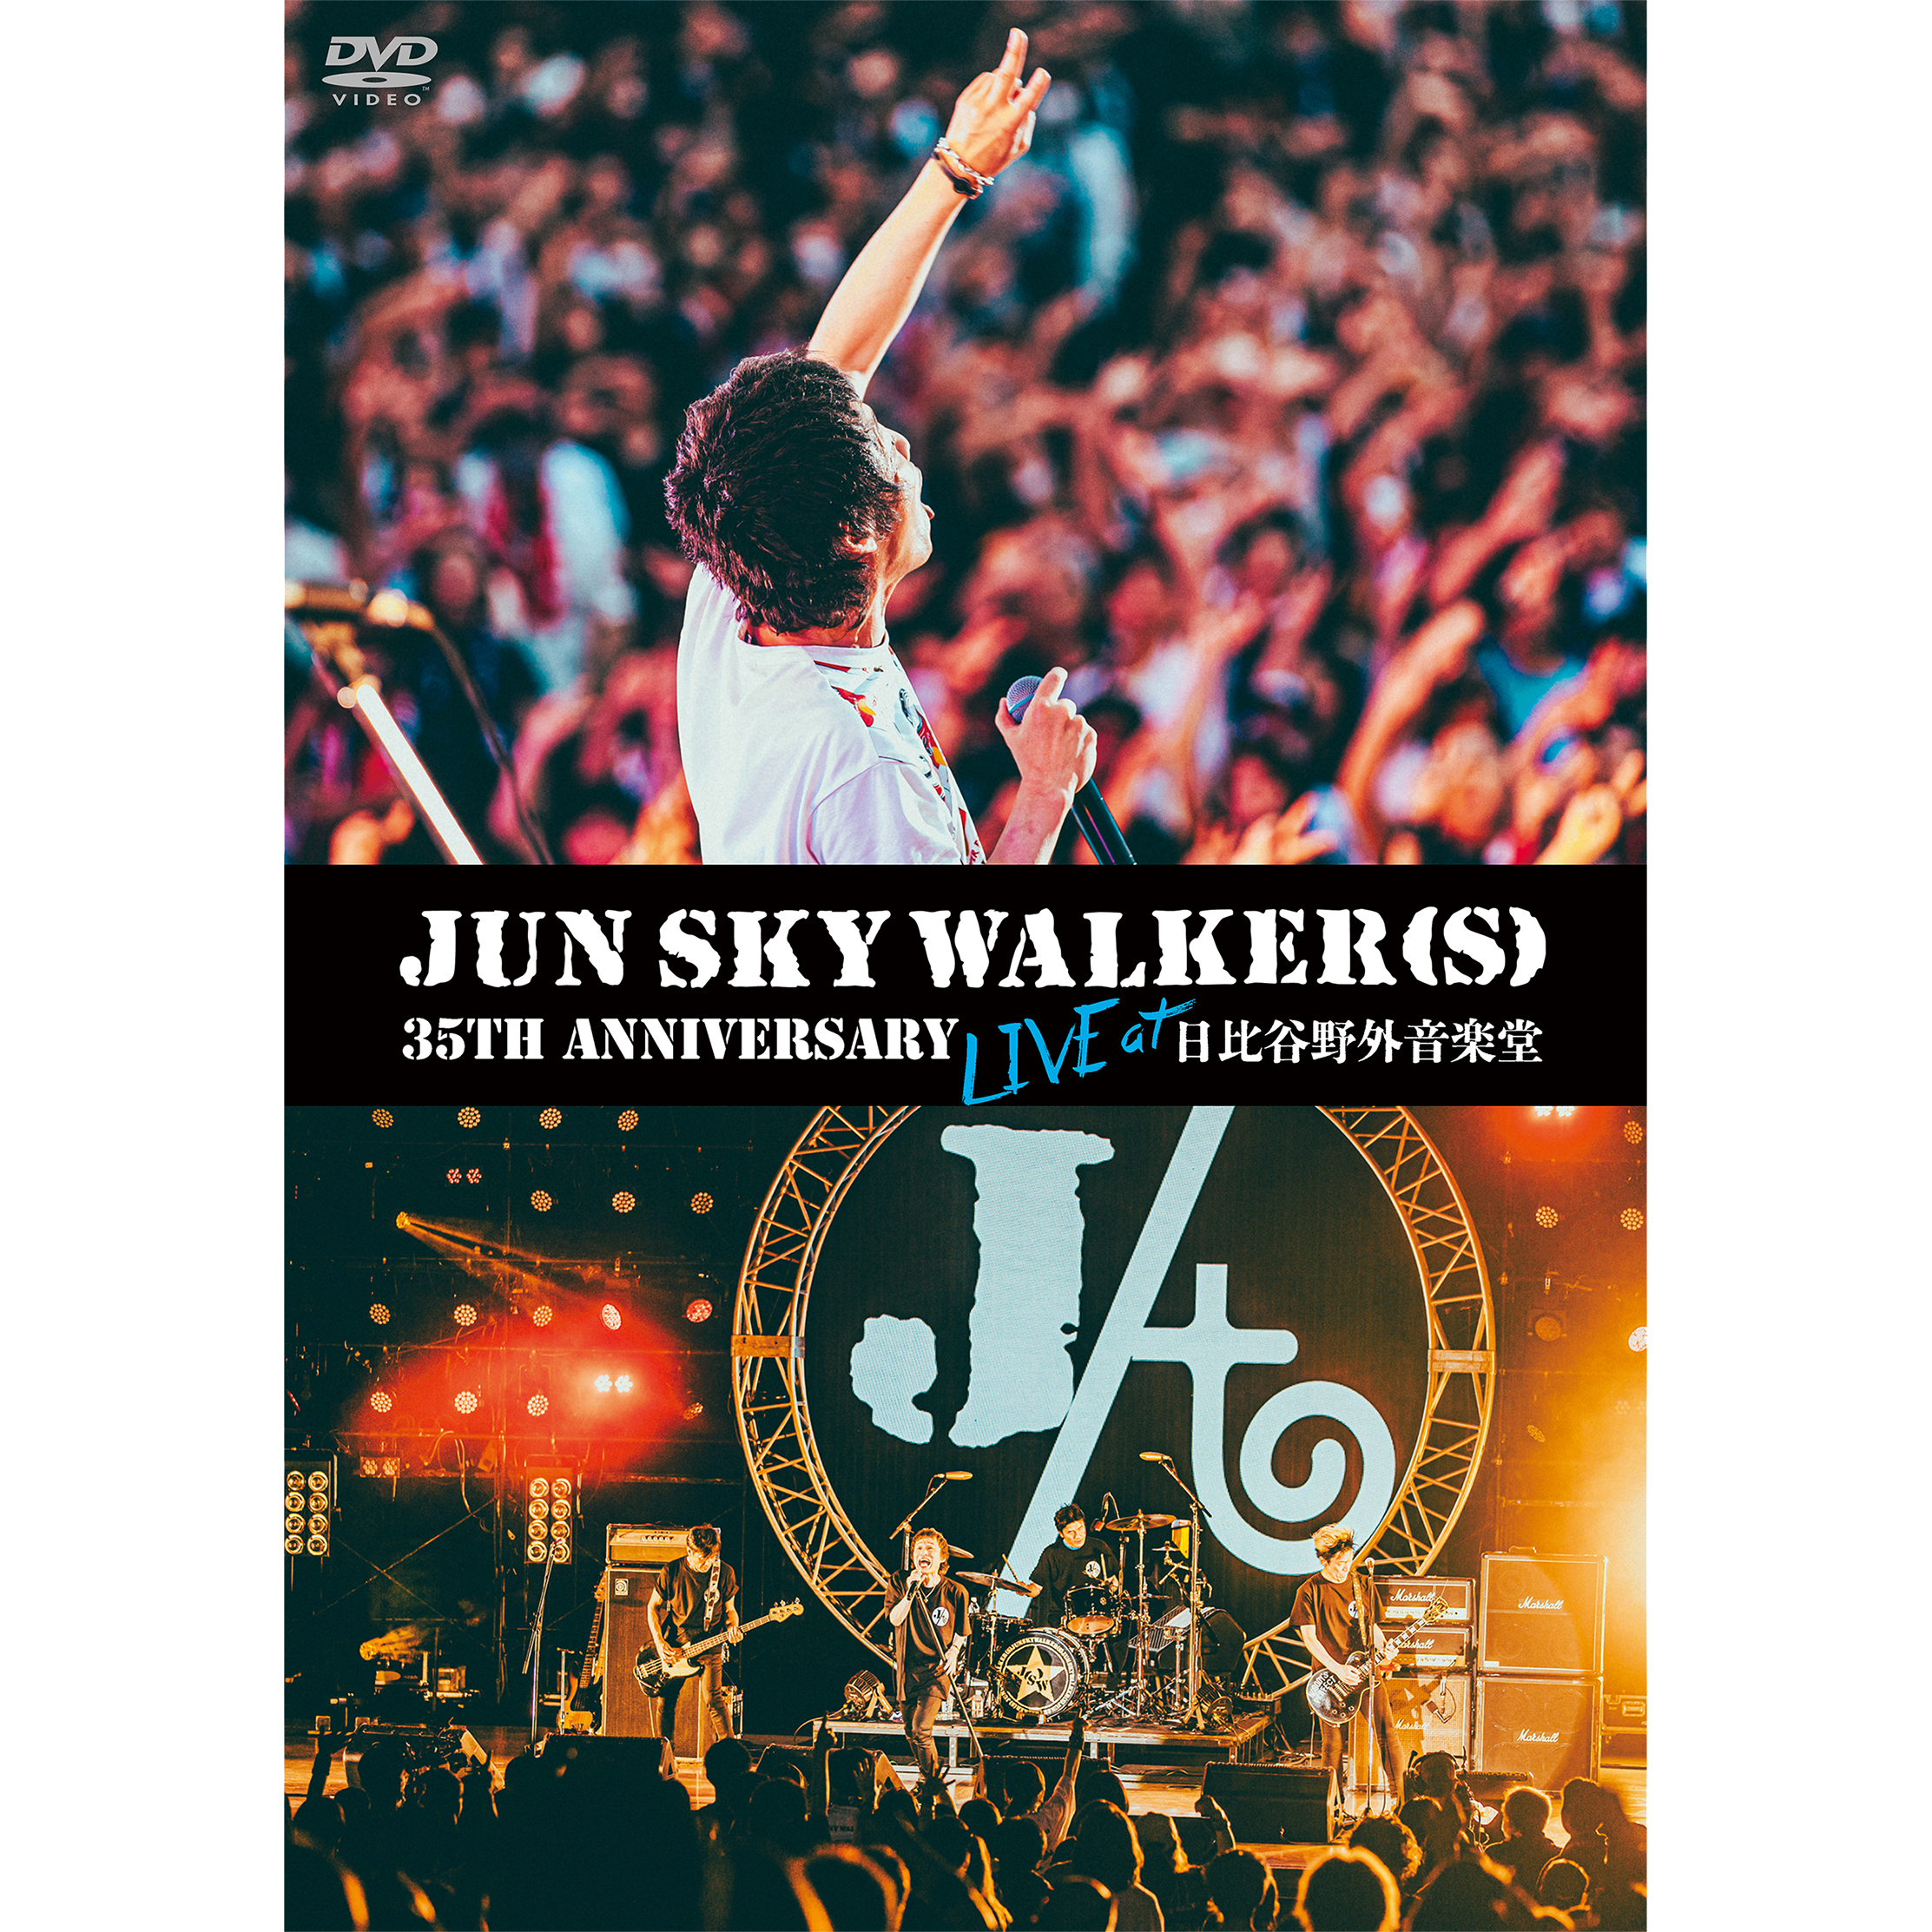 LIVE DVD「JUN SKY WALKER(S) 35th Anniversary Live at 日比谷野外 